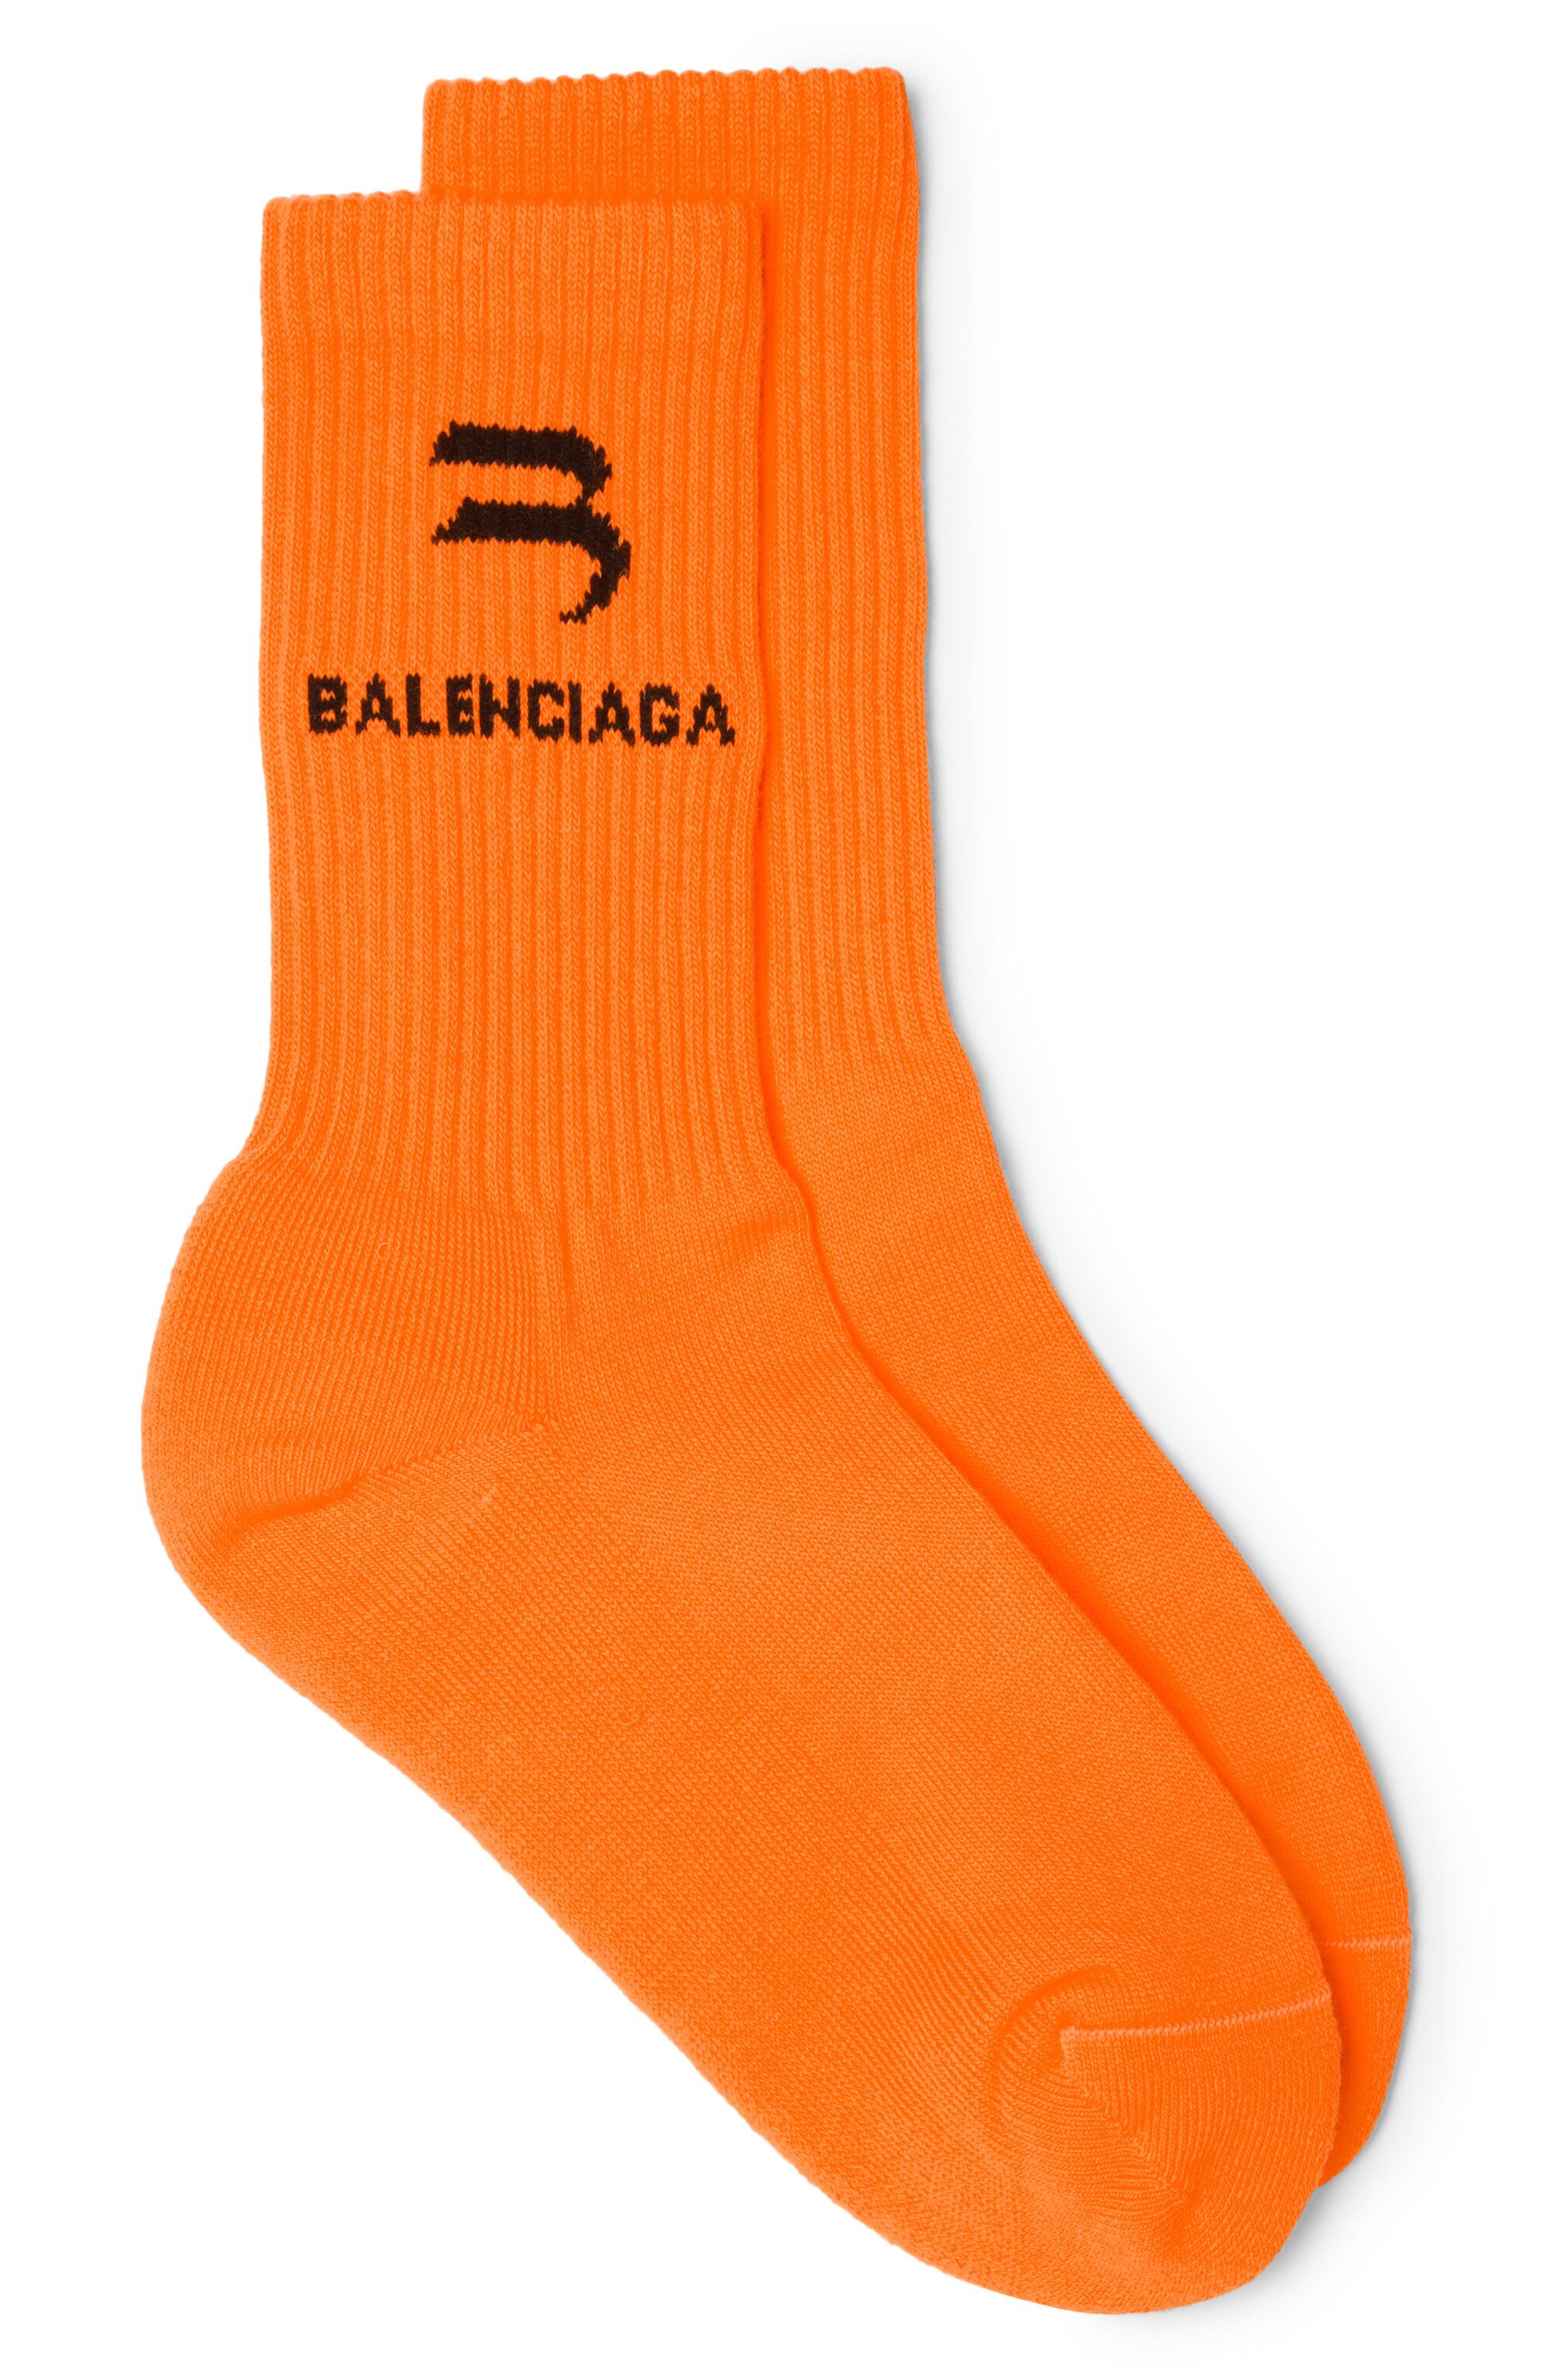 Orange crew socks with a black Balenciaga logo